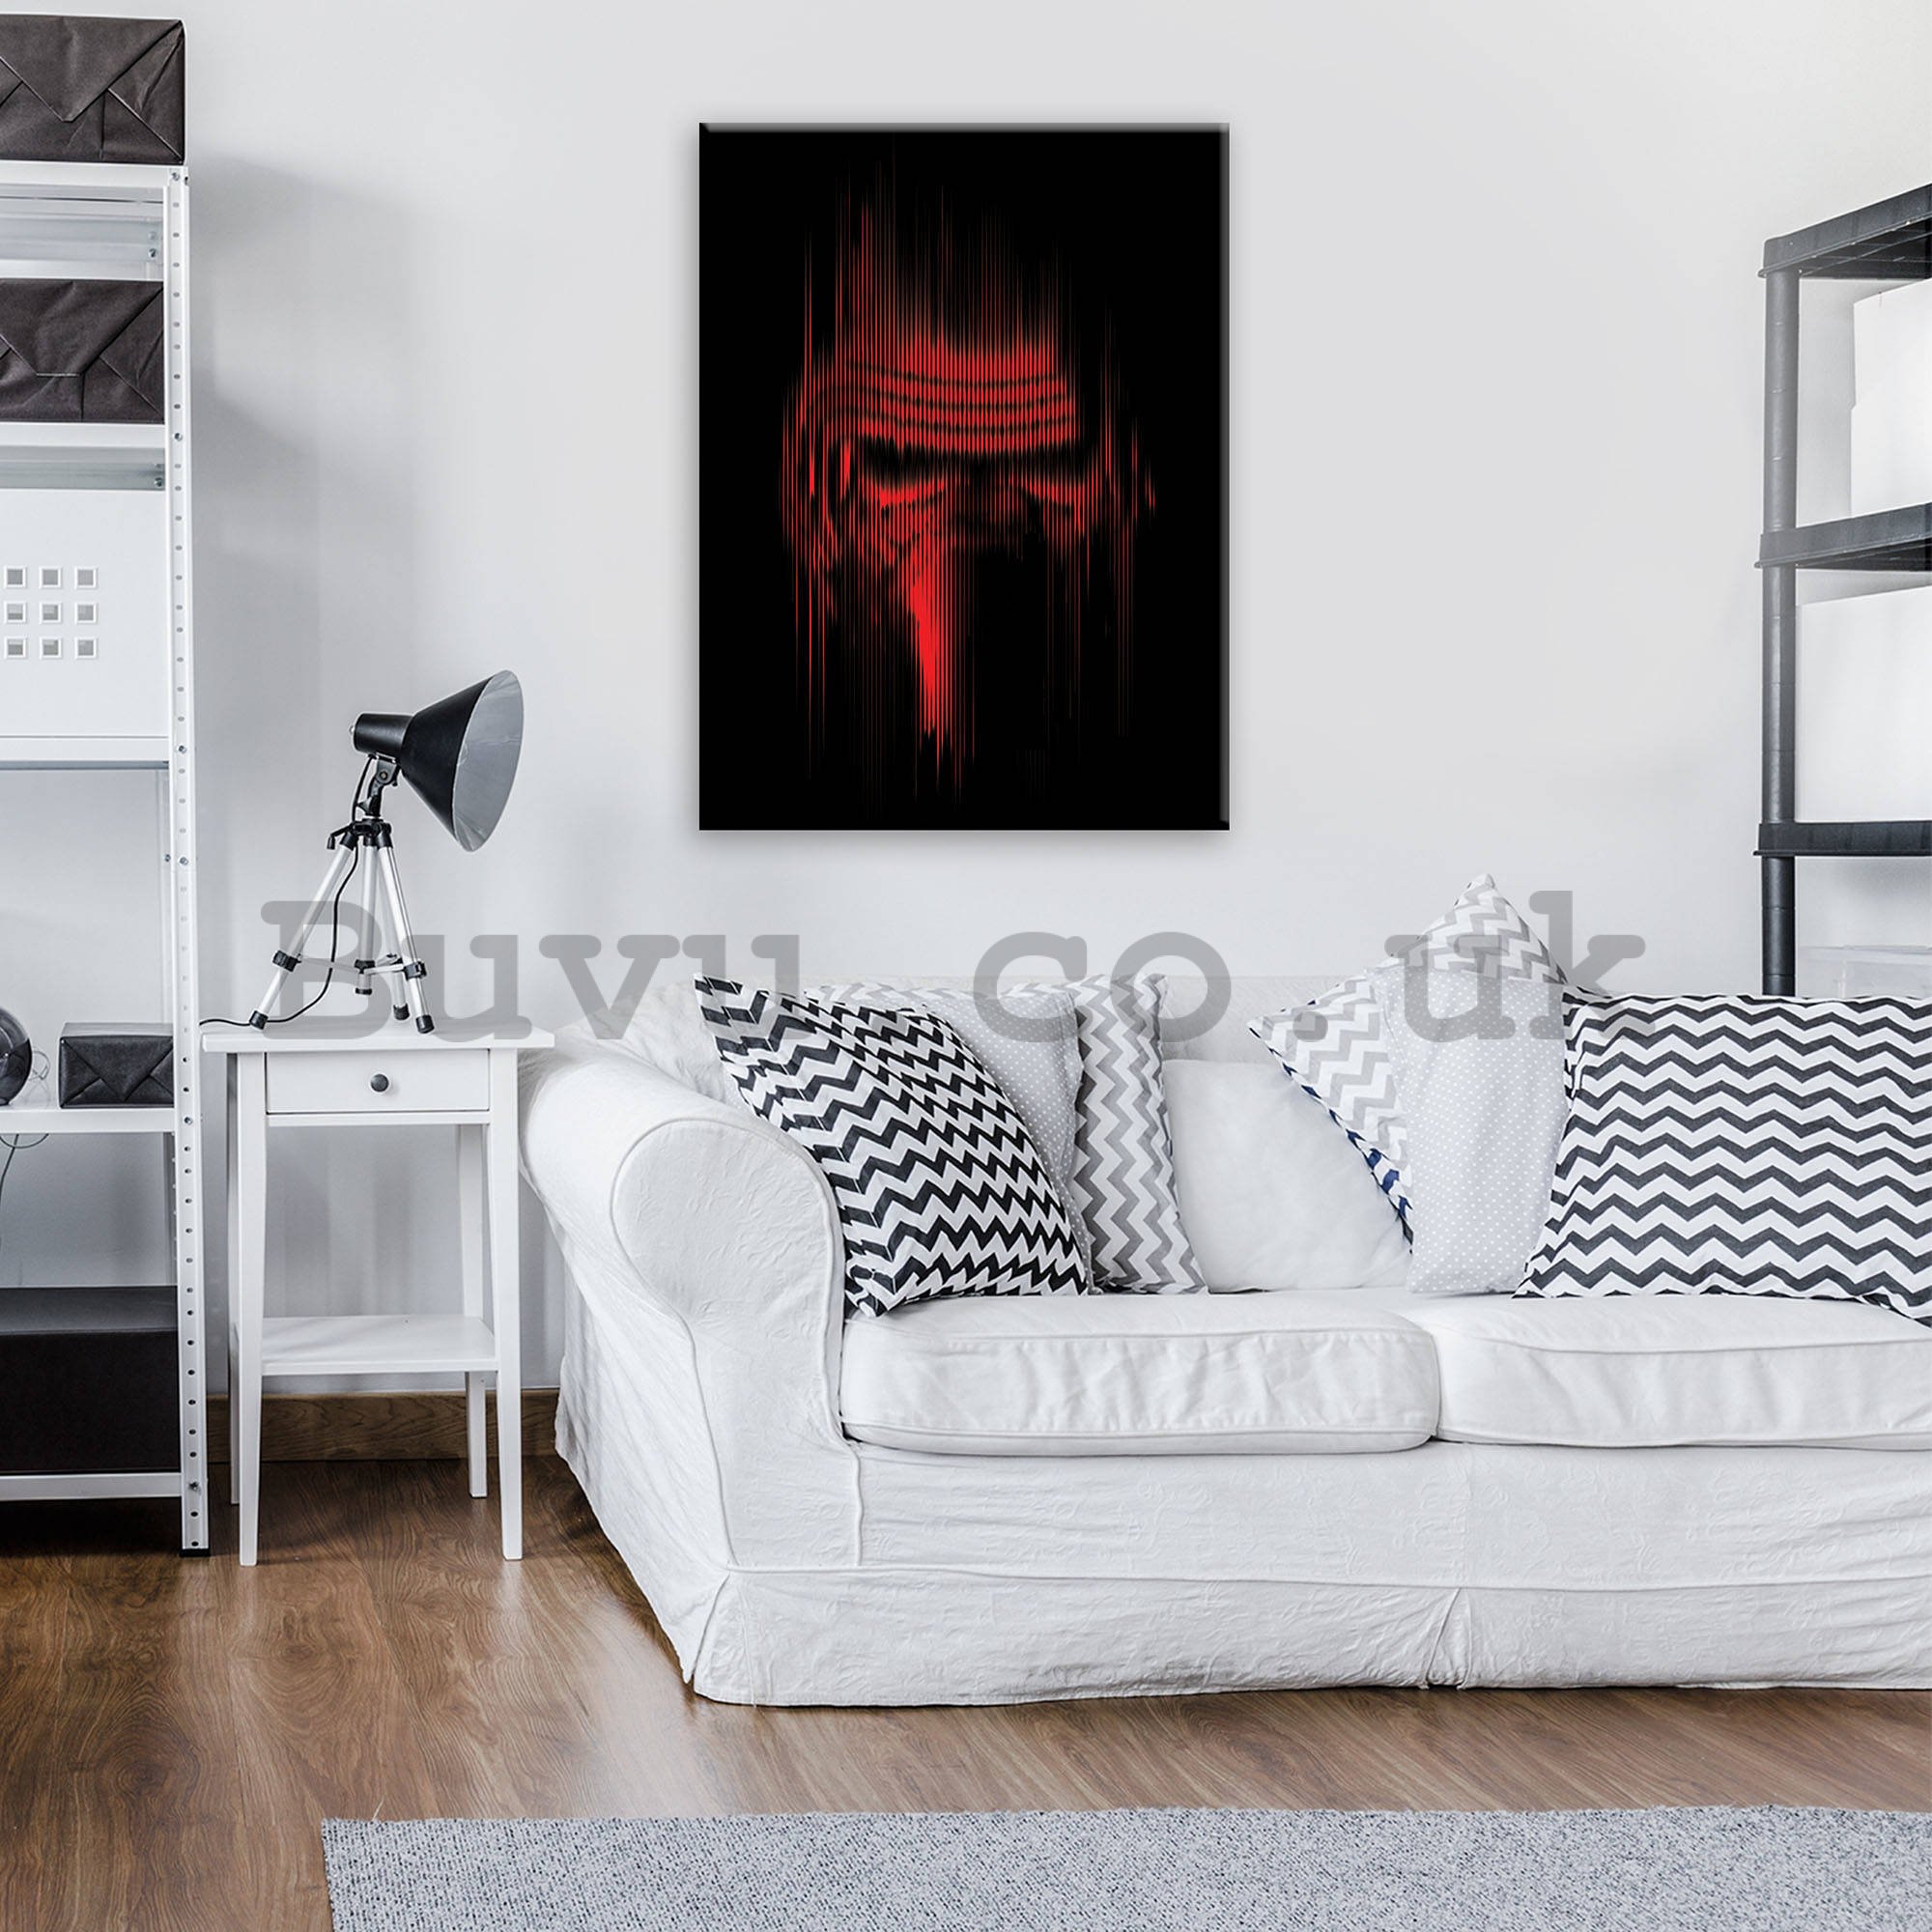 Painting on canvas: Star Wars Kylo Ren (helmet) - 80x60 cm